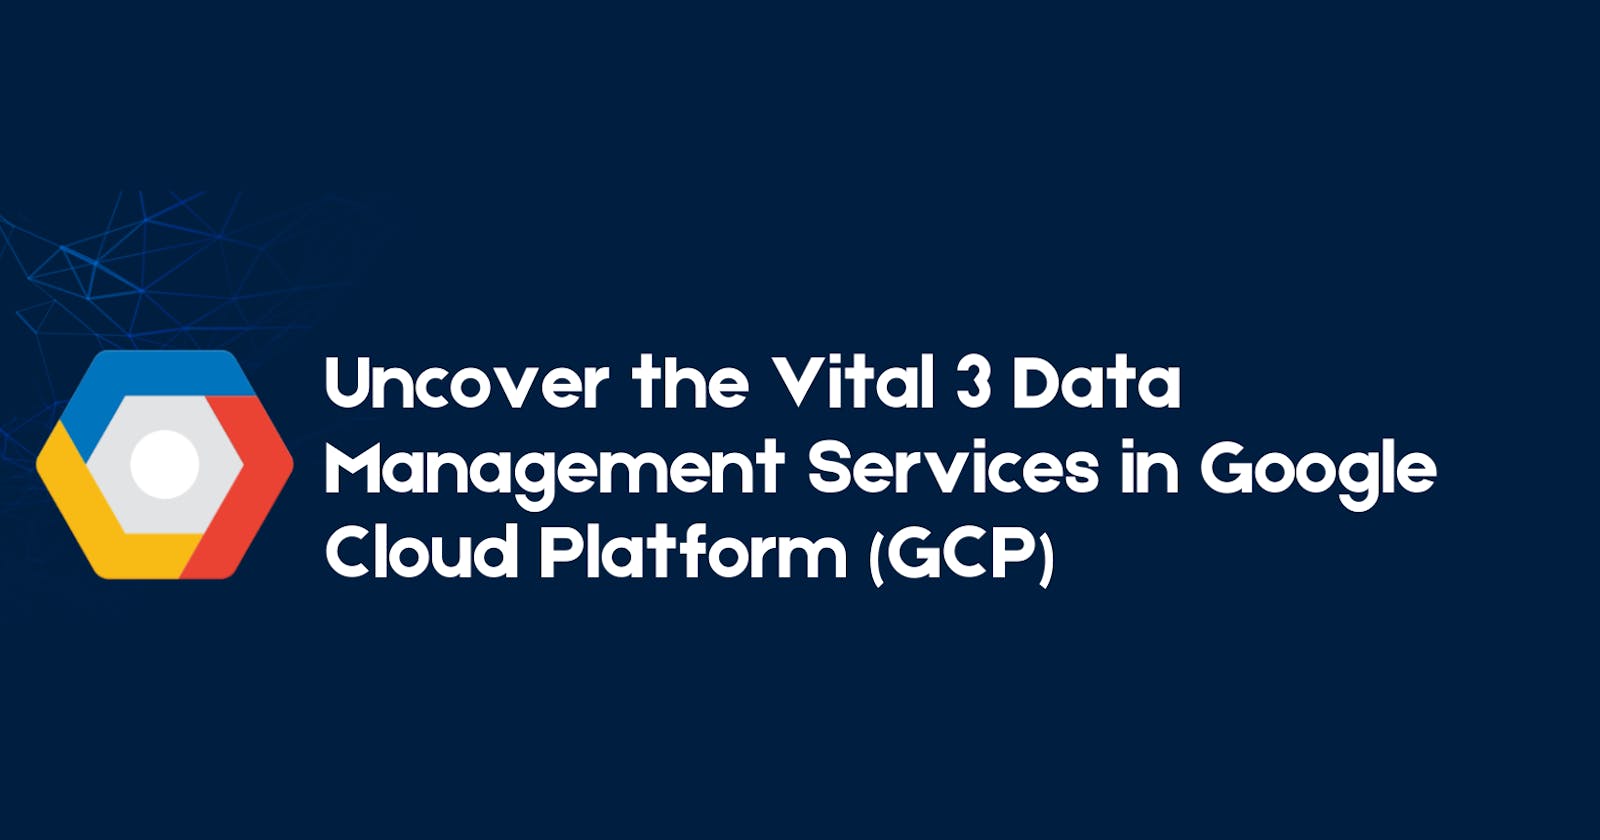 Uncover the Vital 3 Data Management Services in Google Cloud Platform (GCP)